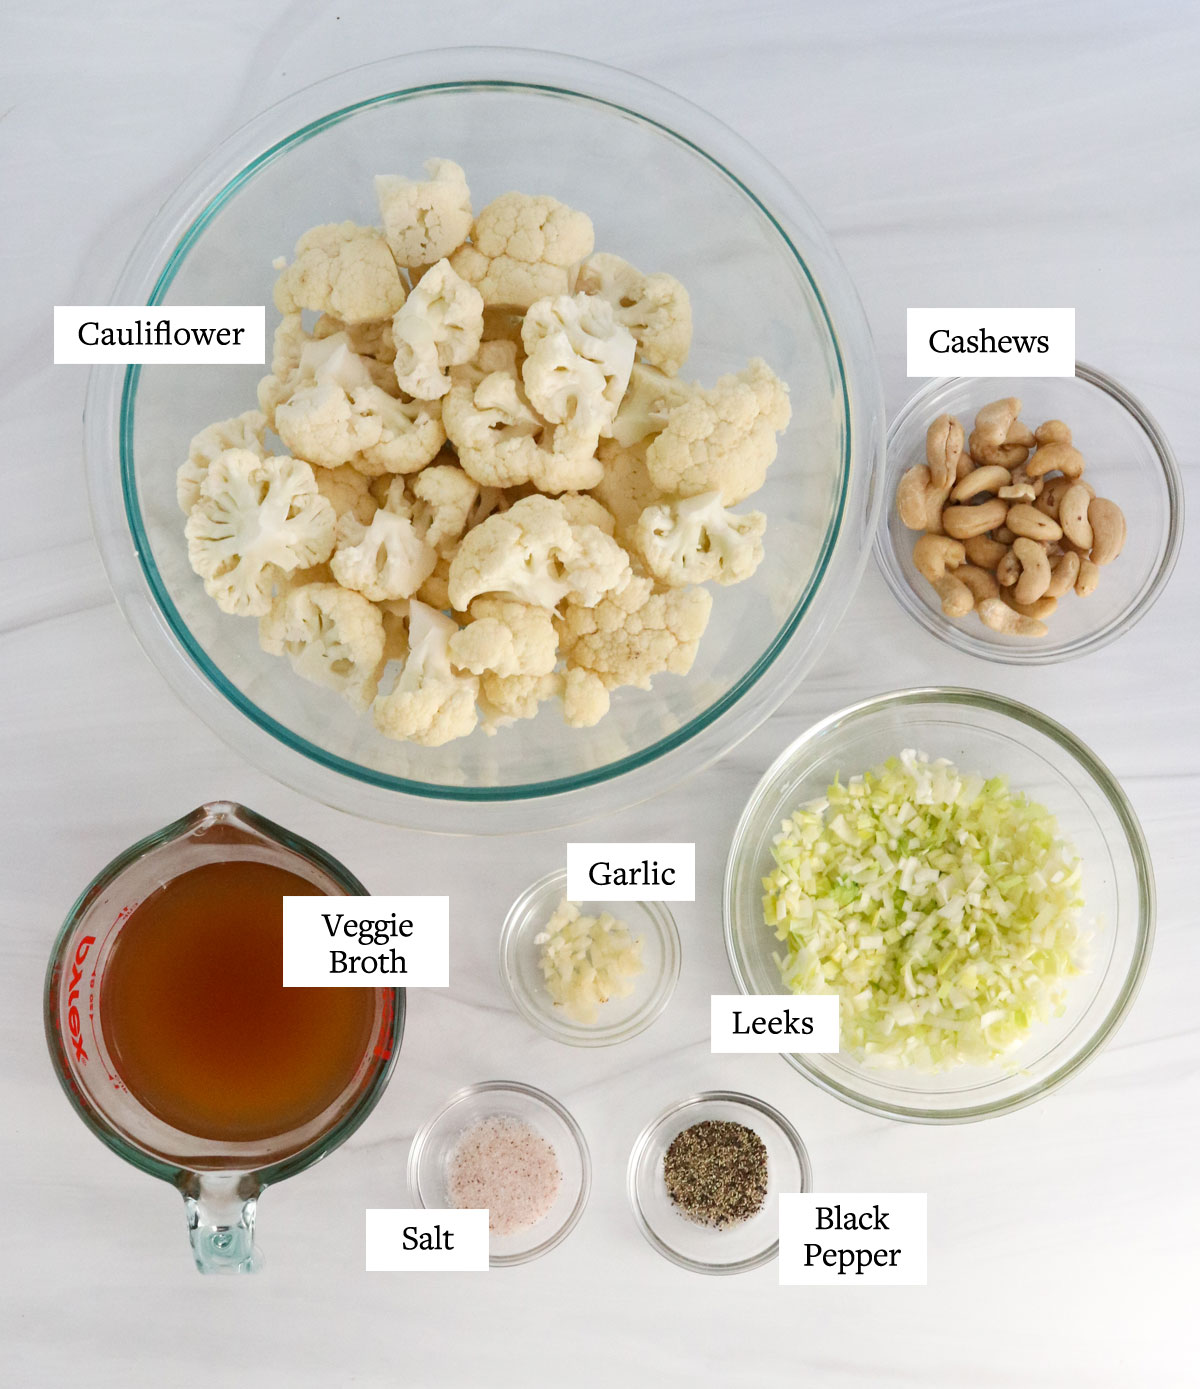 cauliflower ingredients in glass bowls on white surface